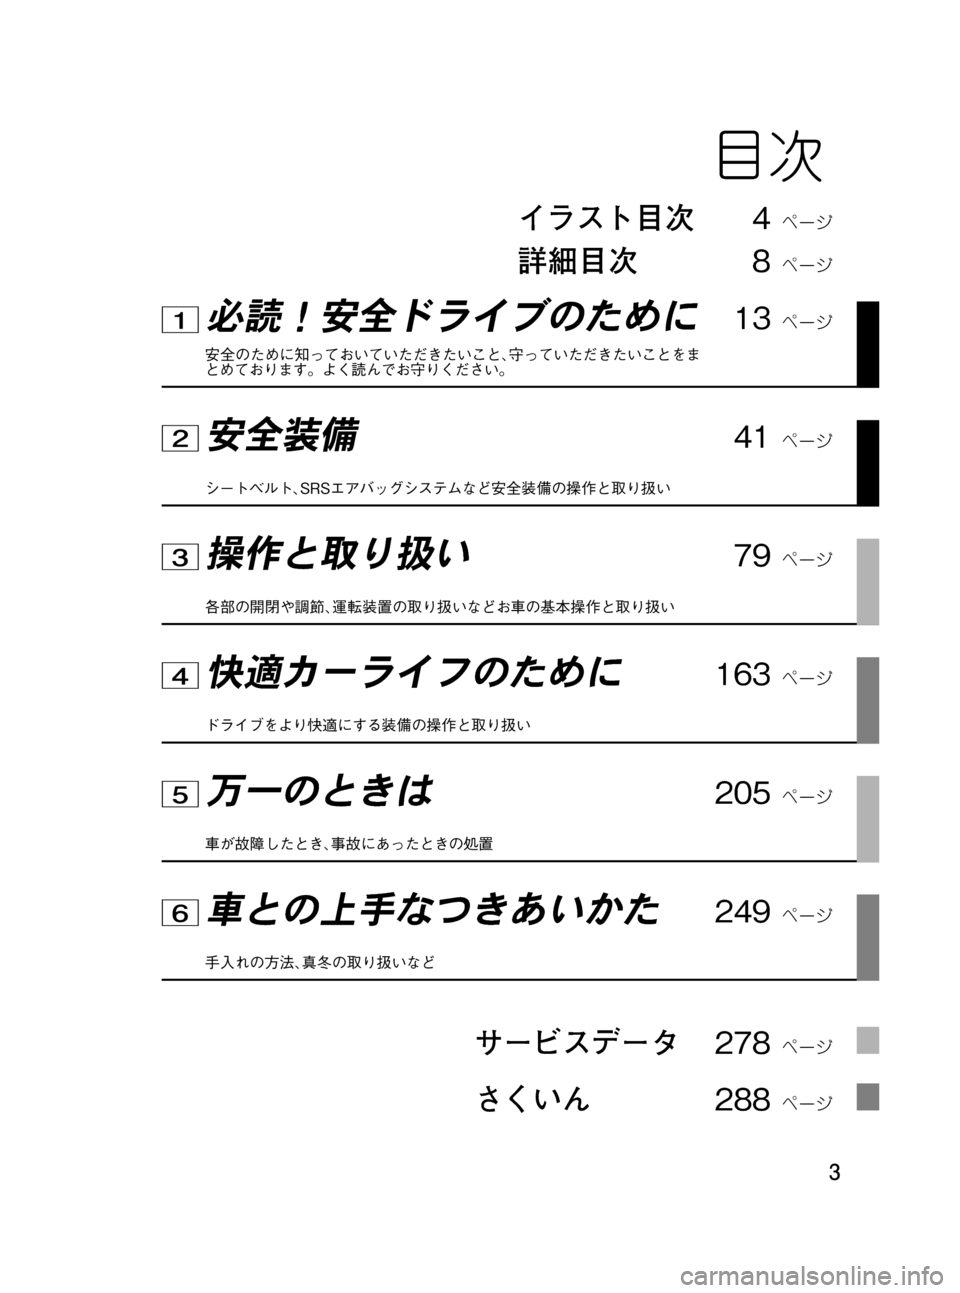 MAZDA MODEL RX 8 2008  取扱説明書 (in Japanese) Black plate (3,1)
RX-8_Fソ_4版3ページ
2010年8月23日01:41 PM
Form No.Fソ
目次
イラスト目次4ページ
詳細目次8ページ
必読！安全ドライブのために13ページ
安全の